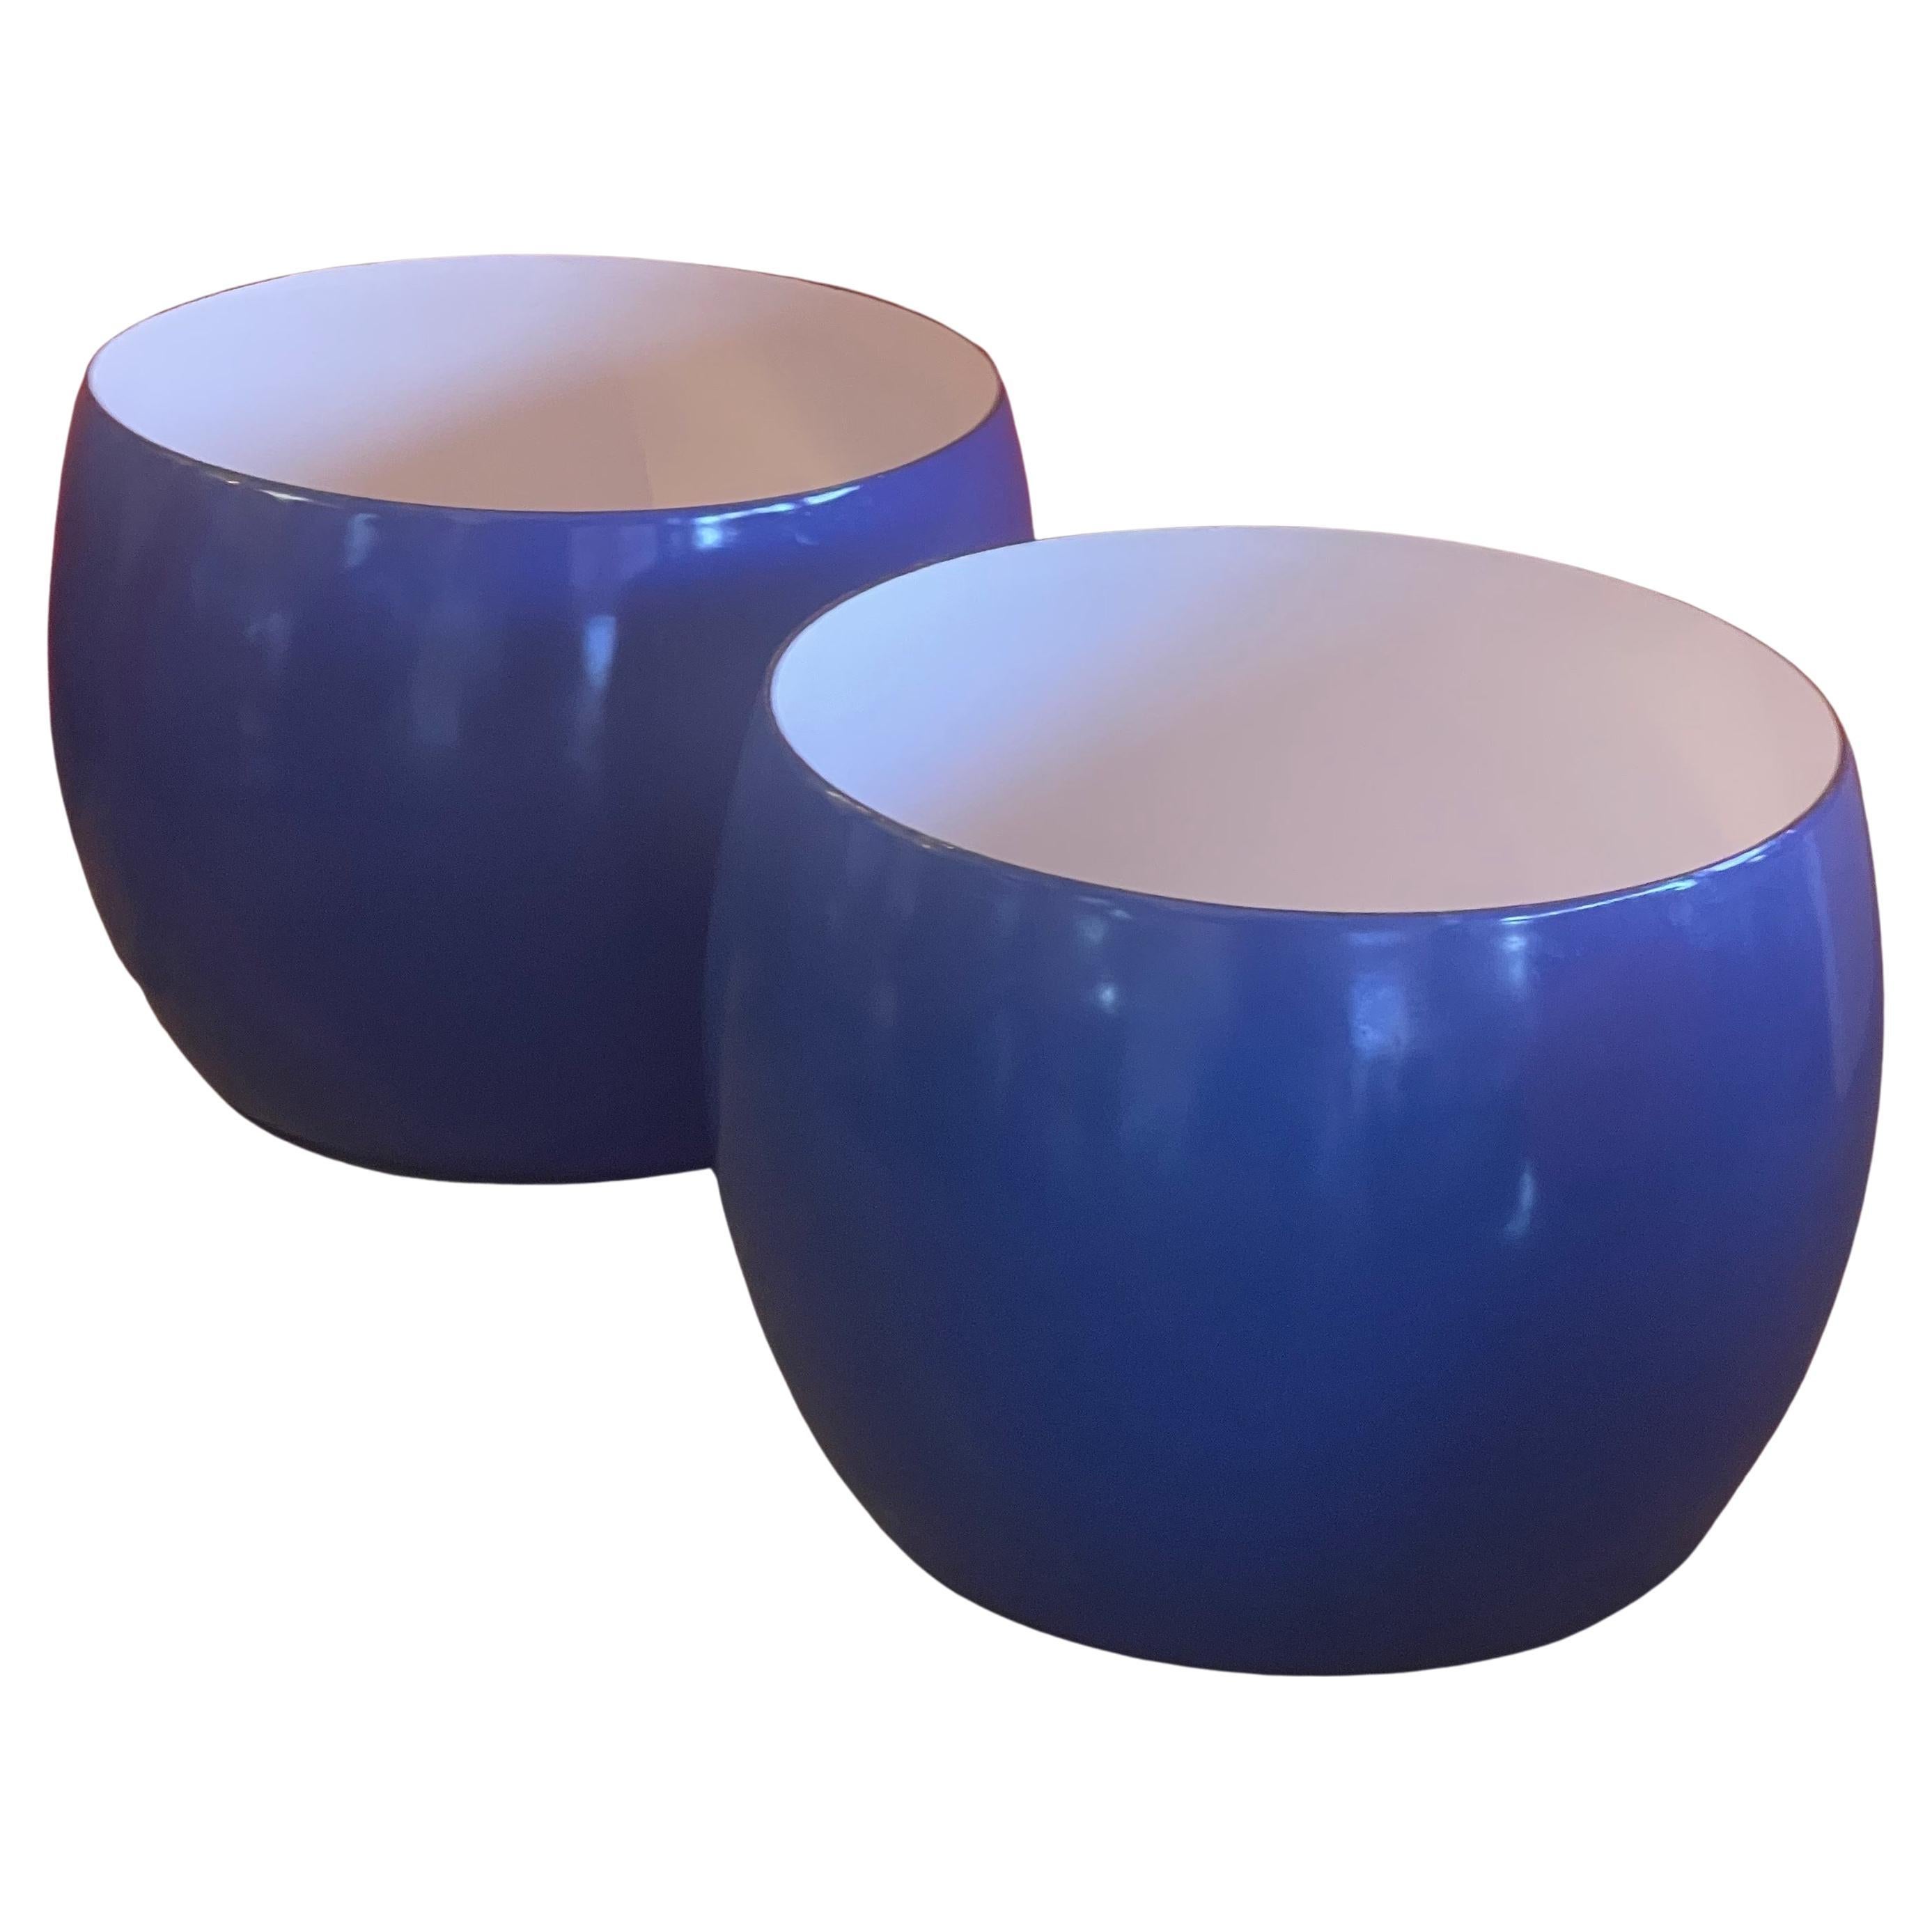 Pair of Danish Modern Blue & White Enamel Bowl by Jens Quistgaard for Dansk